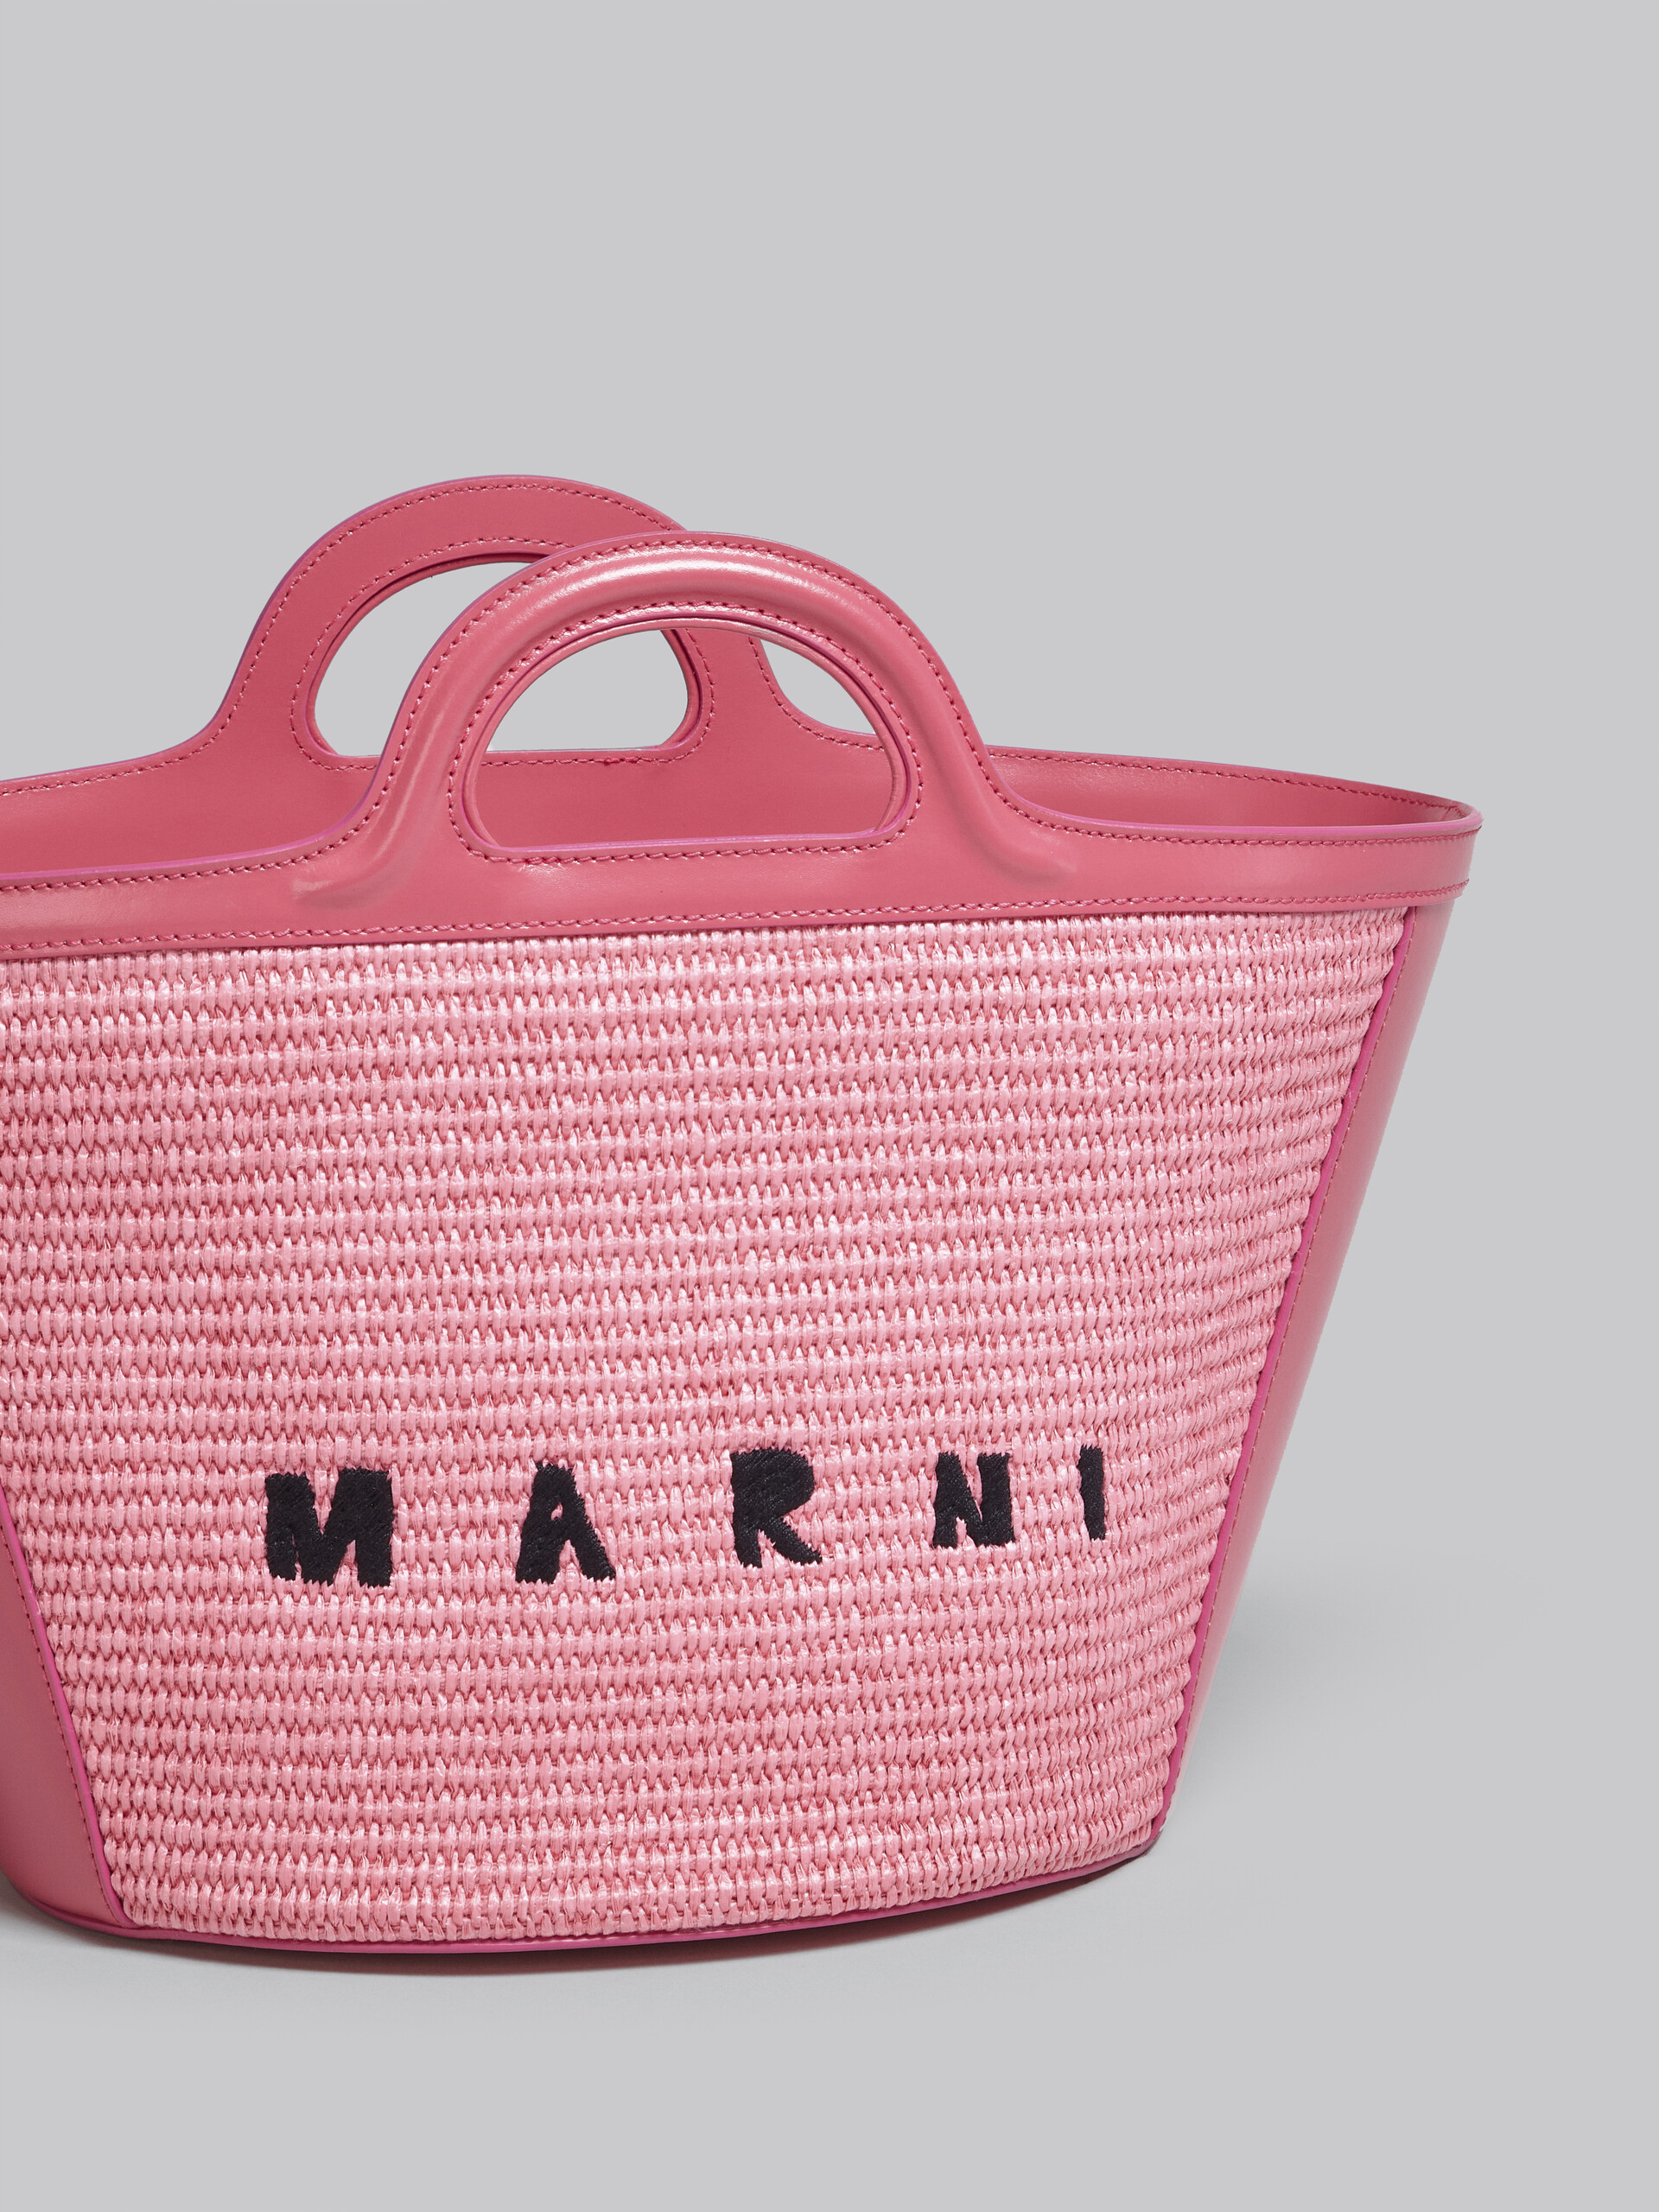 TROPICALIA small bag in pink leather and raffia - Handbag - Image 5